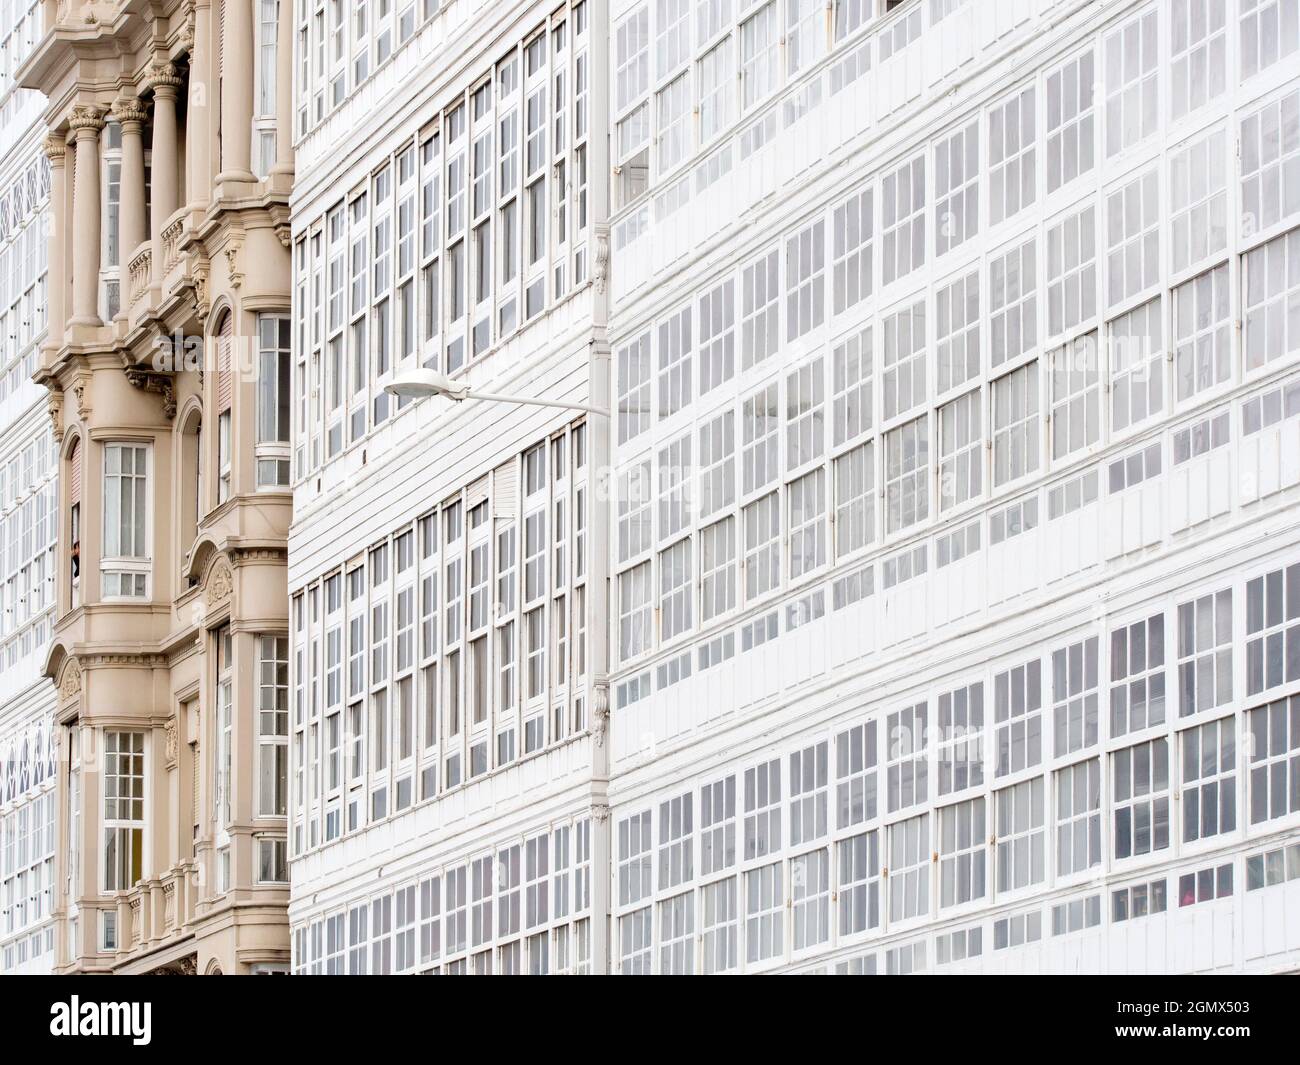 La Coruna, Spain - 10 October 2015; no people in view. Glass-enclosed balconies, or galerias, are a very distinct architectural style of La Coruna in Stock Photo